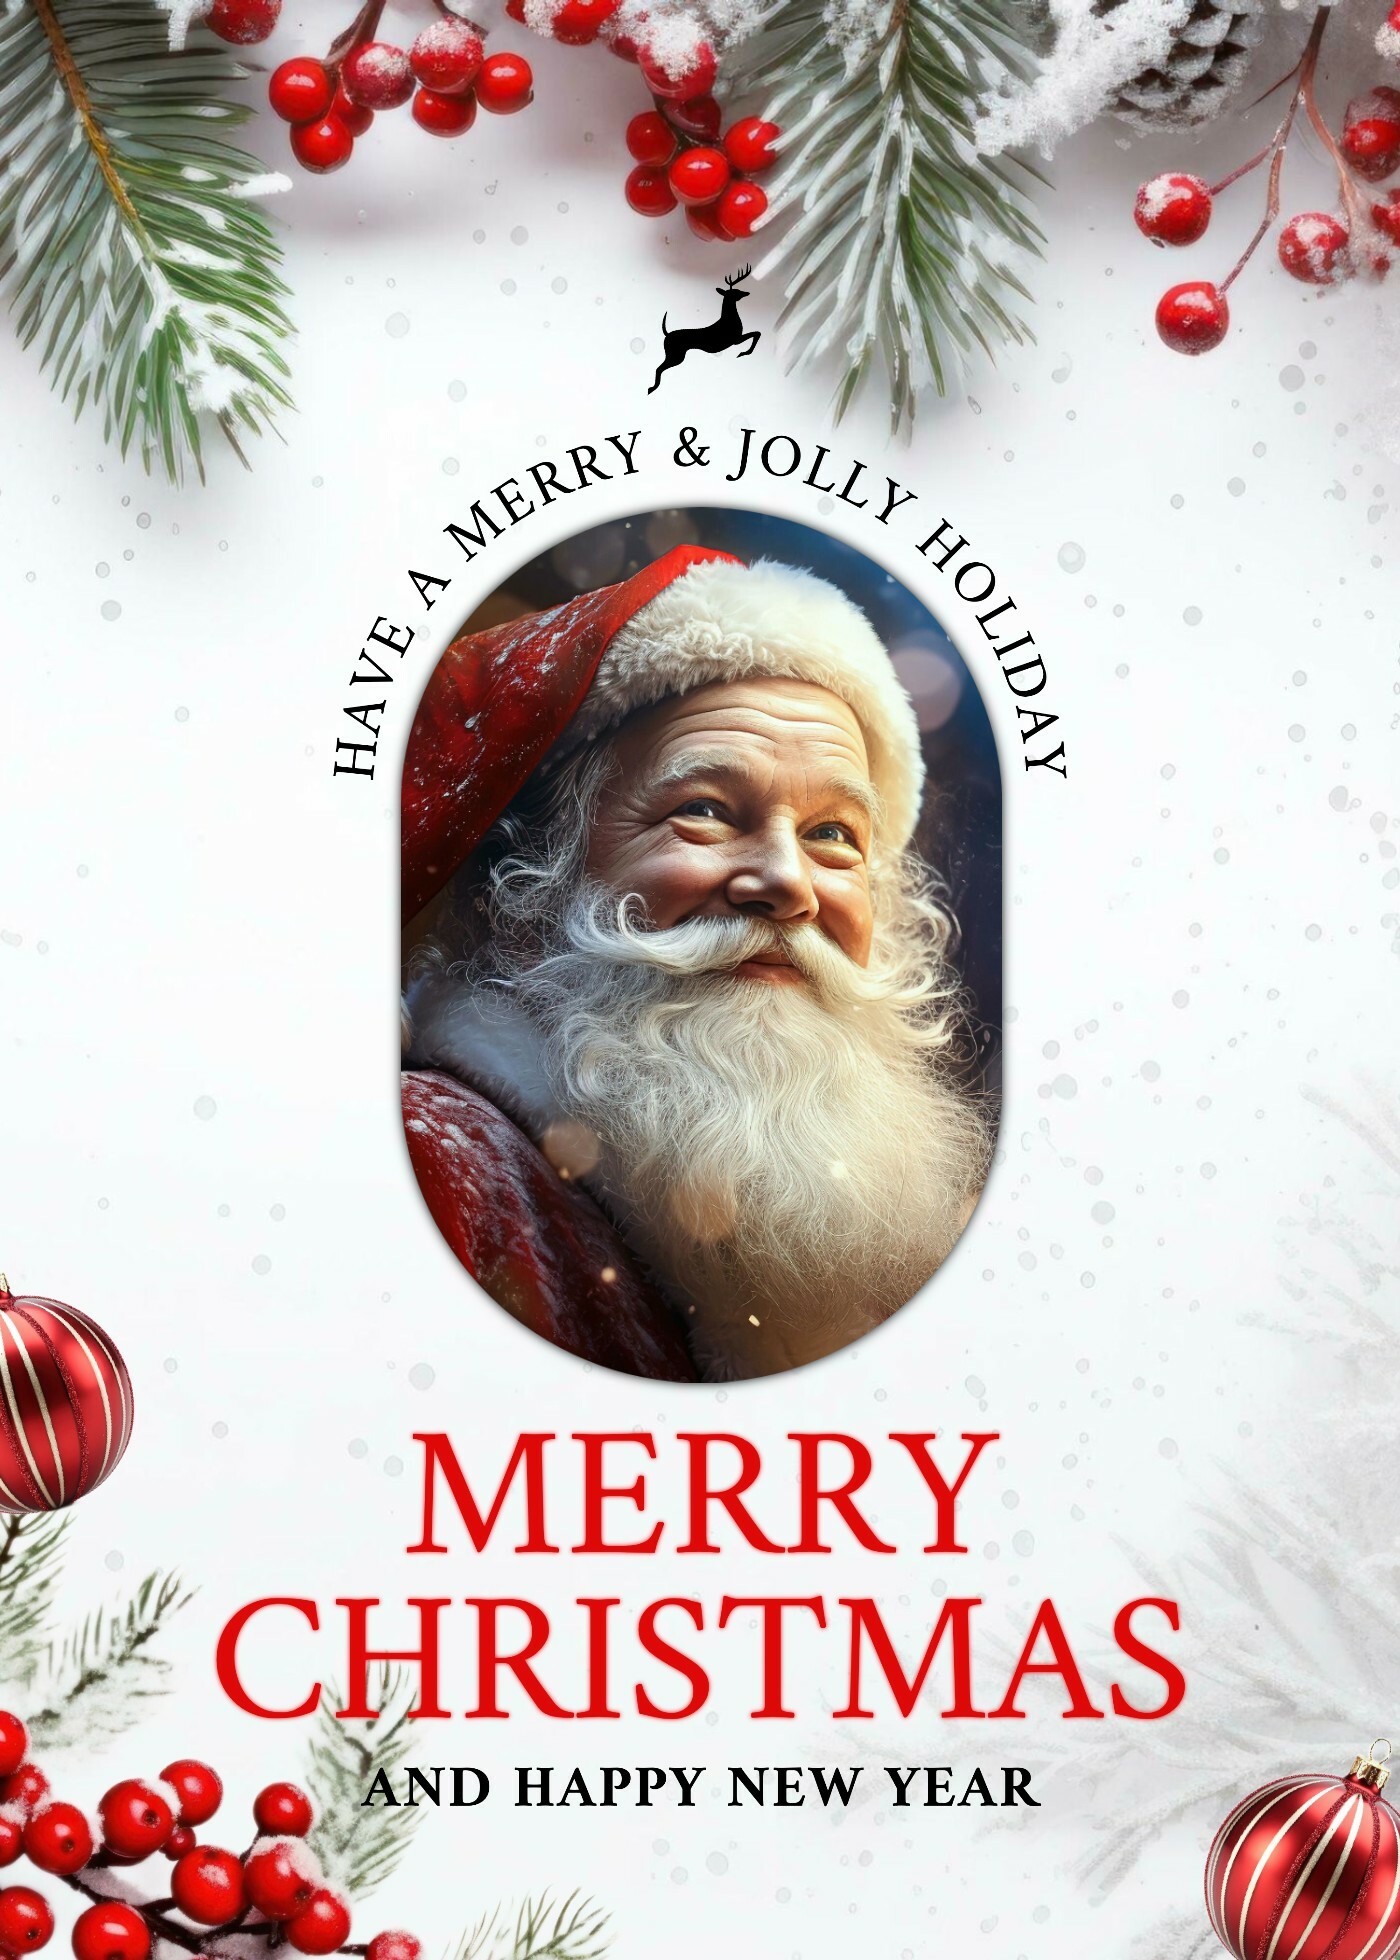 White Christmas With Santa Greeting Card